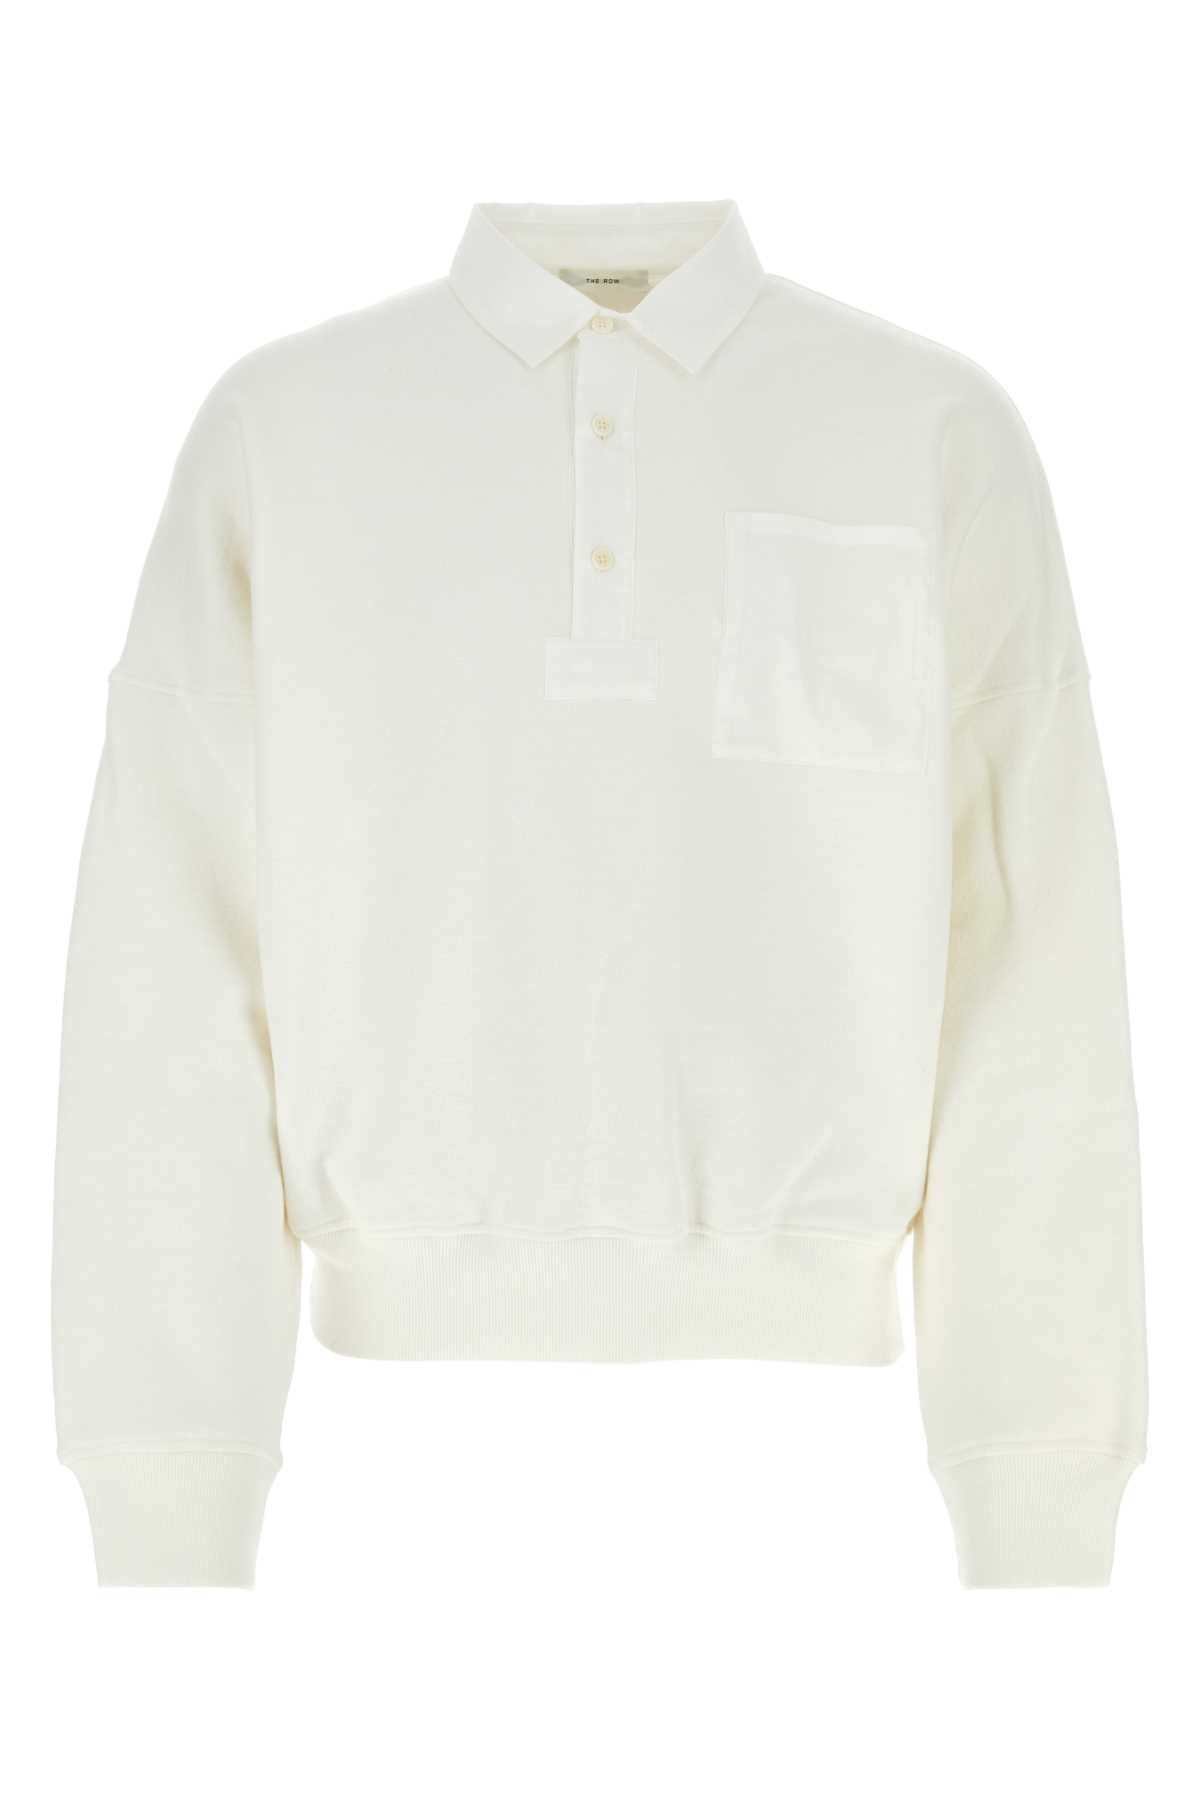 White Stretch Cotton Dente Polo Shirt